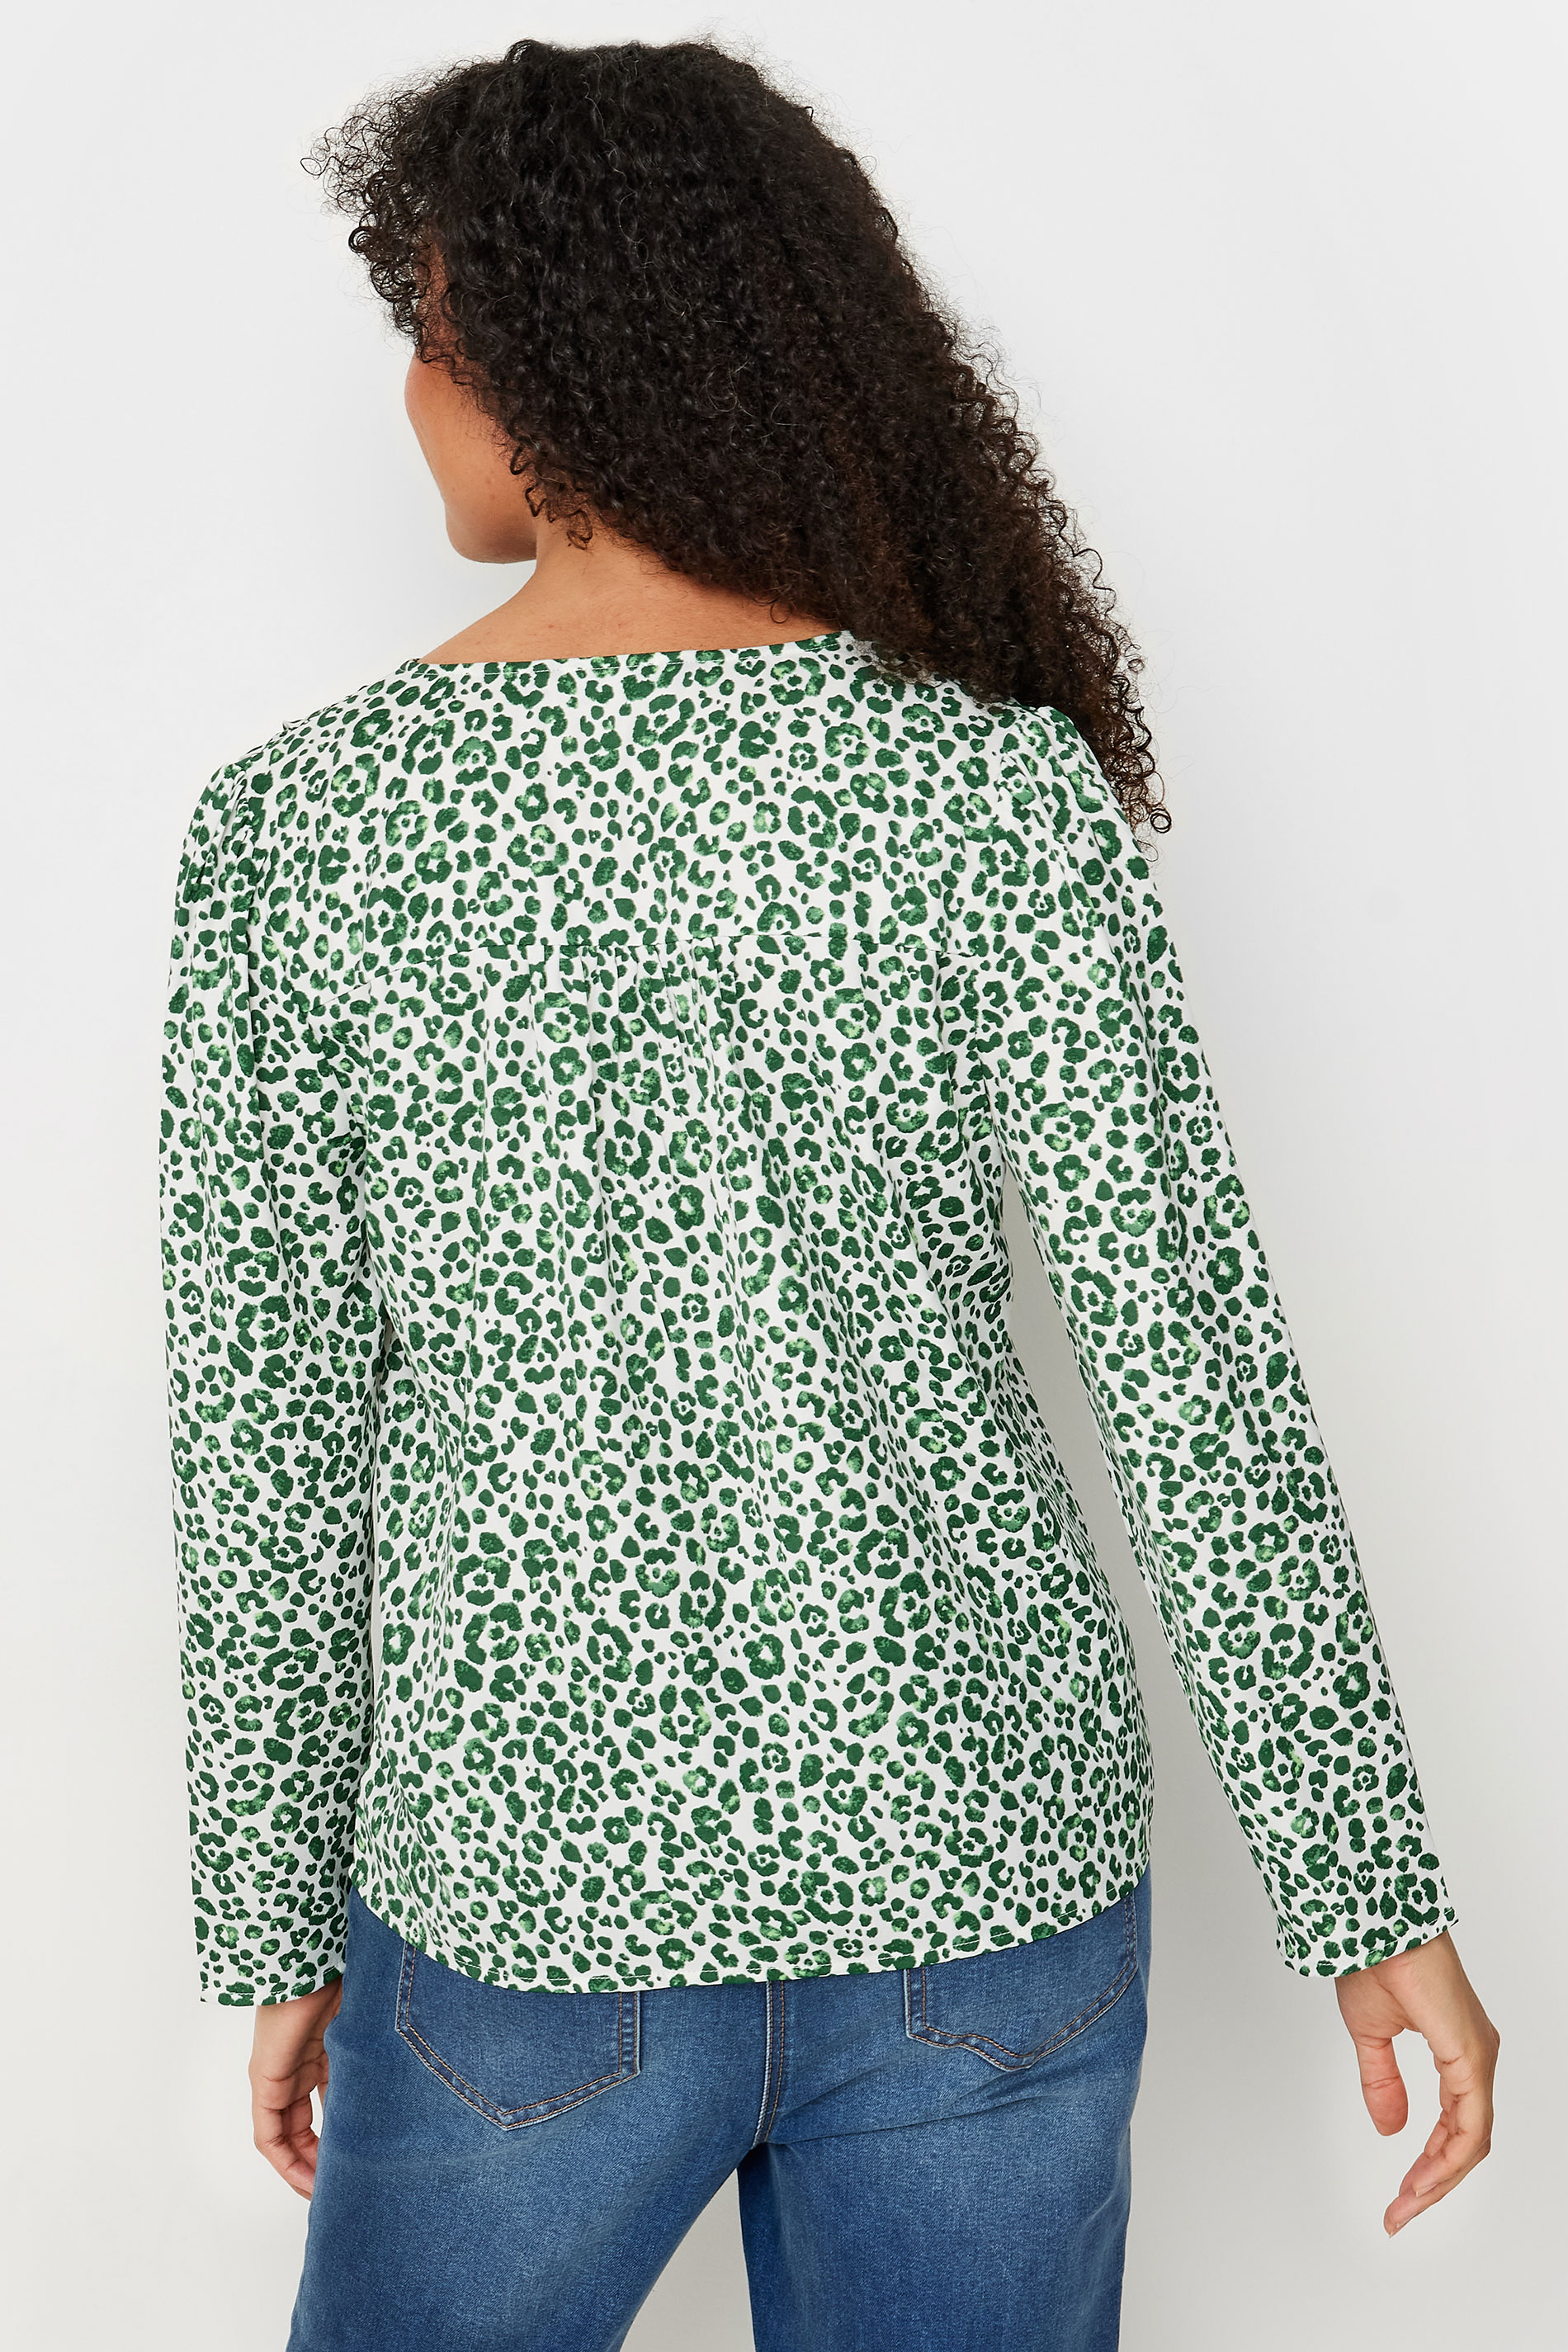 M&Co Green Leopard Print Long Sleeve Blouse | M&Co 3